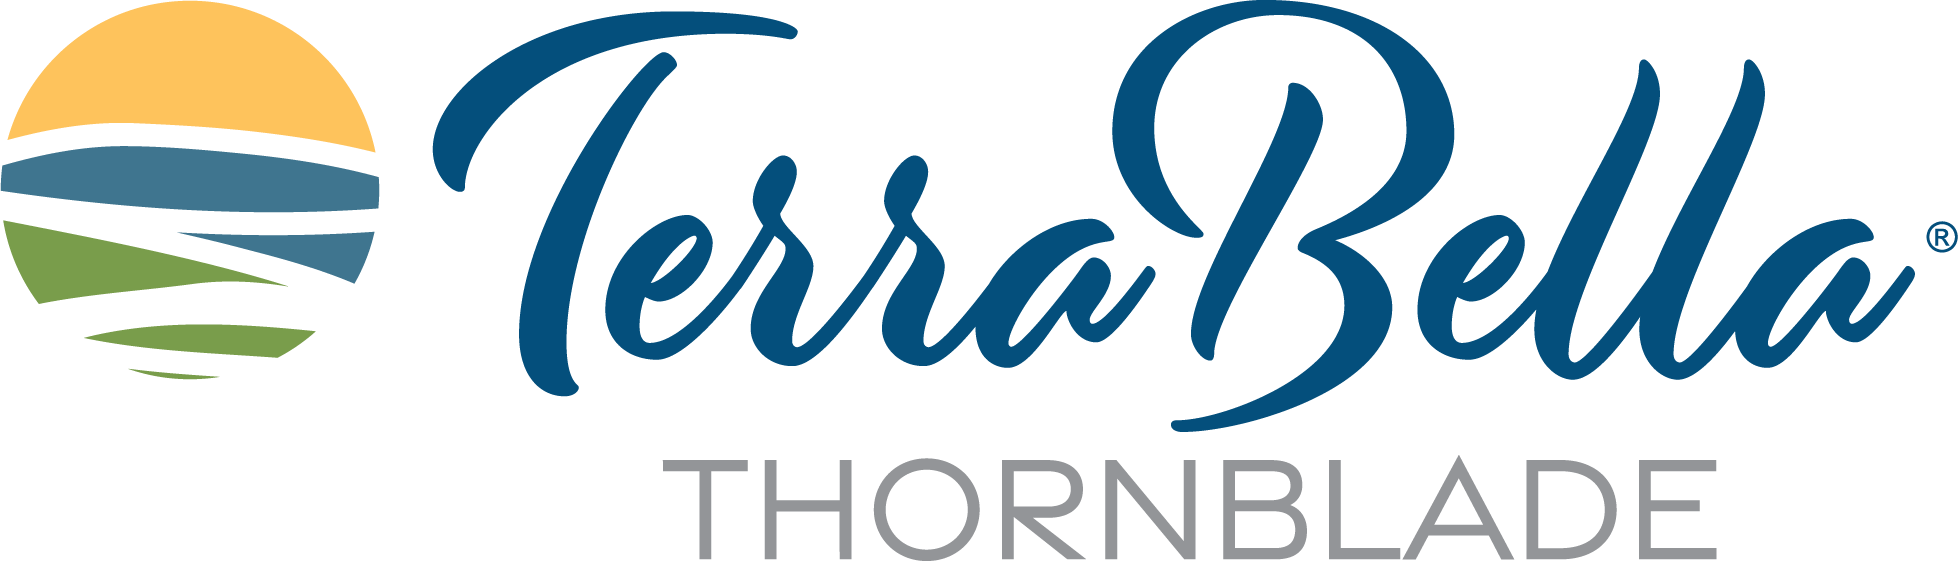 TerraBella Thornblade-Horizontal